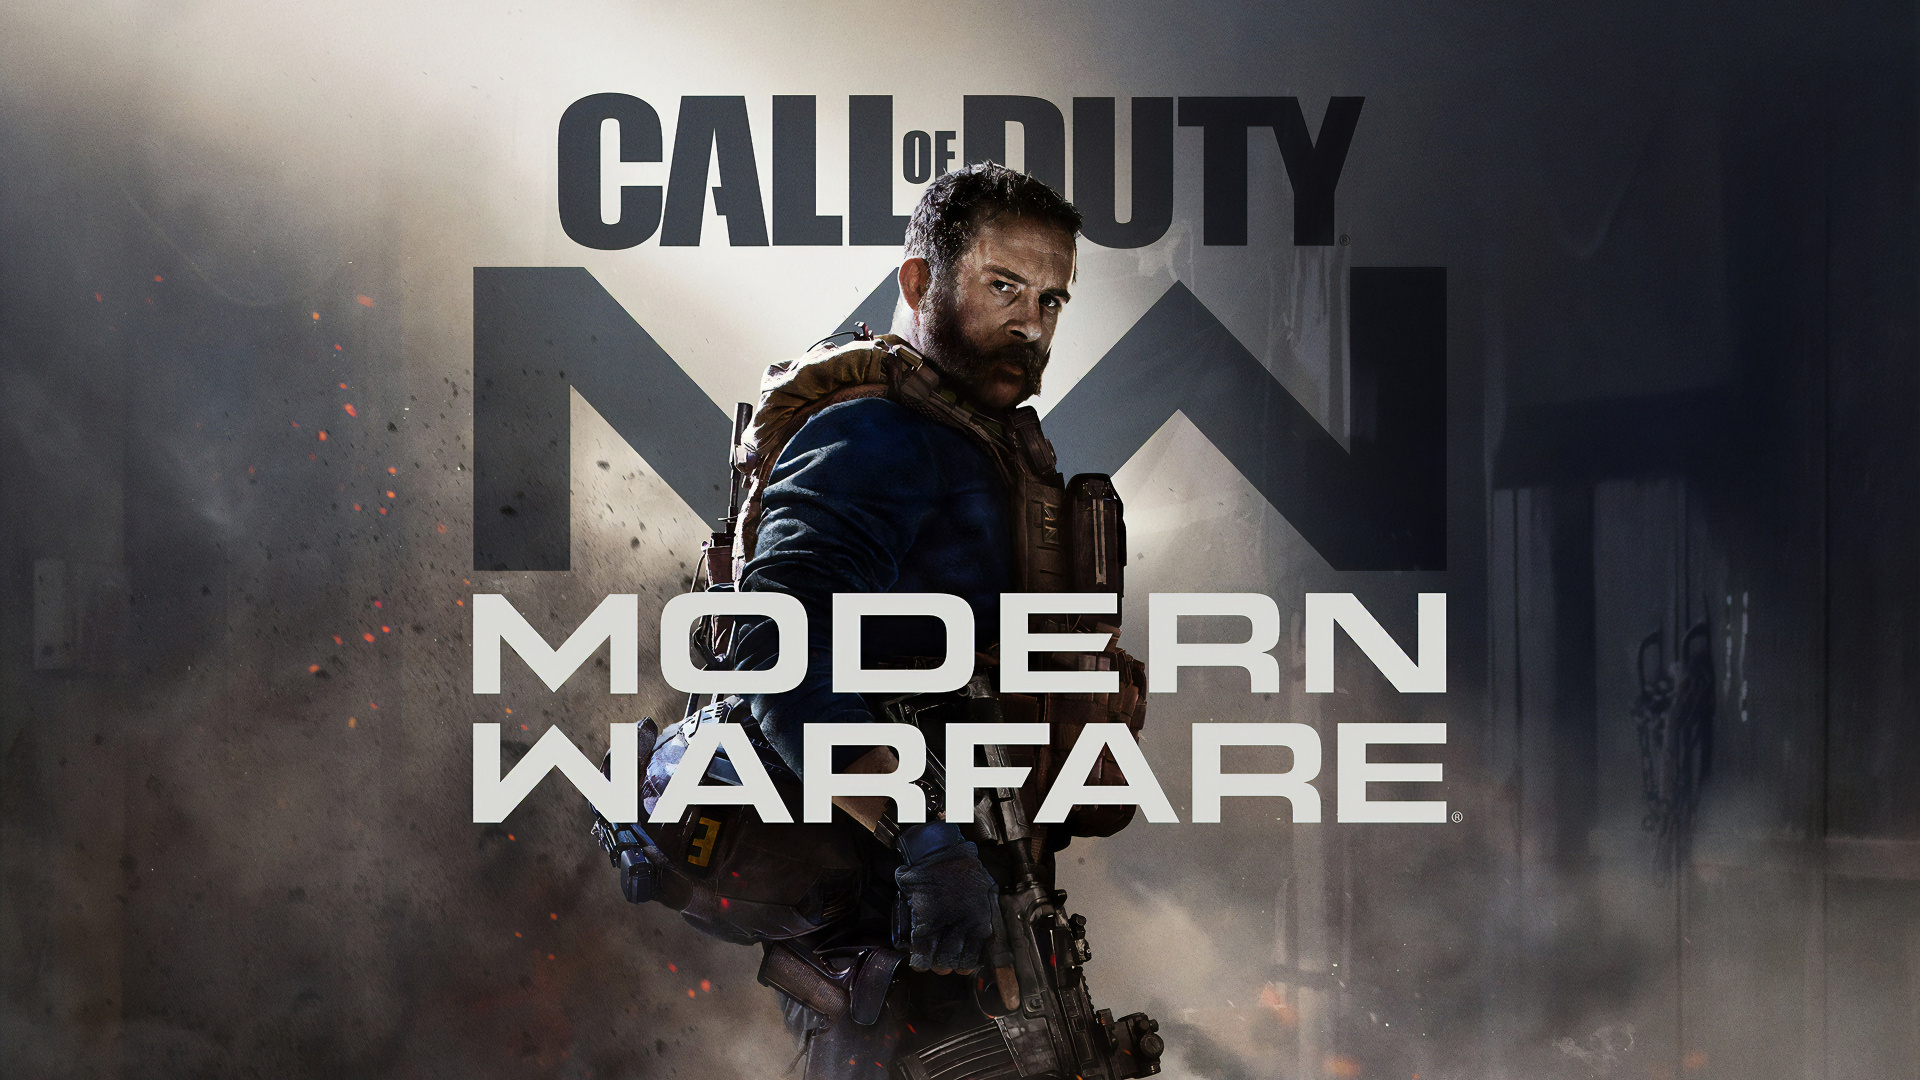 Call of Duty Modern Warfare, Call of Duty 4 Modern Warfare, Movie, pc Game, Shooter Game. Wallpaper in 1920x1080 Resolution